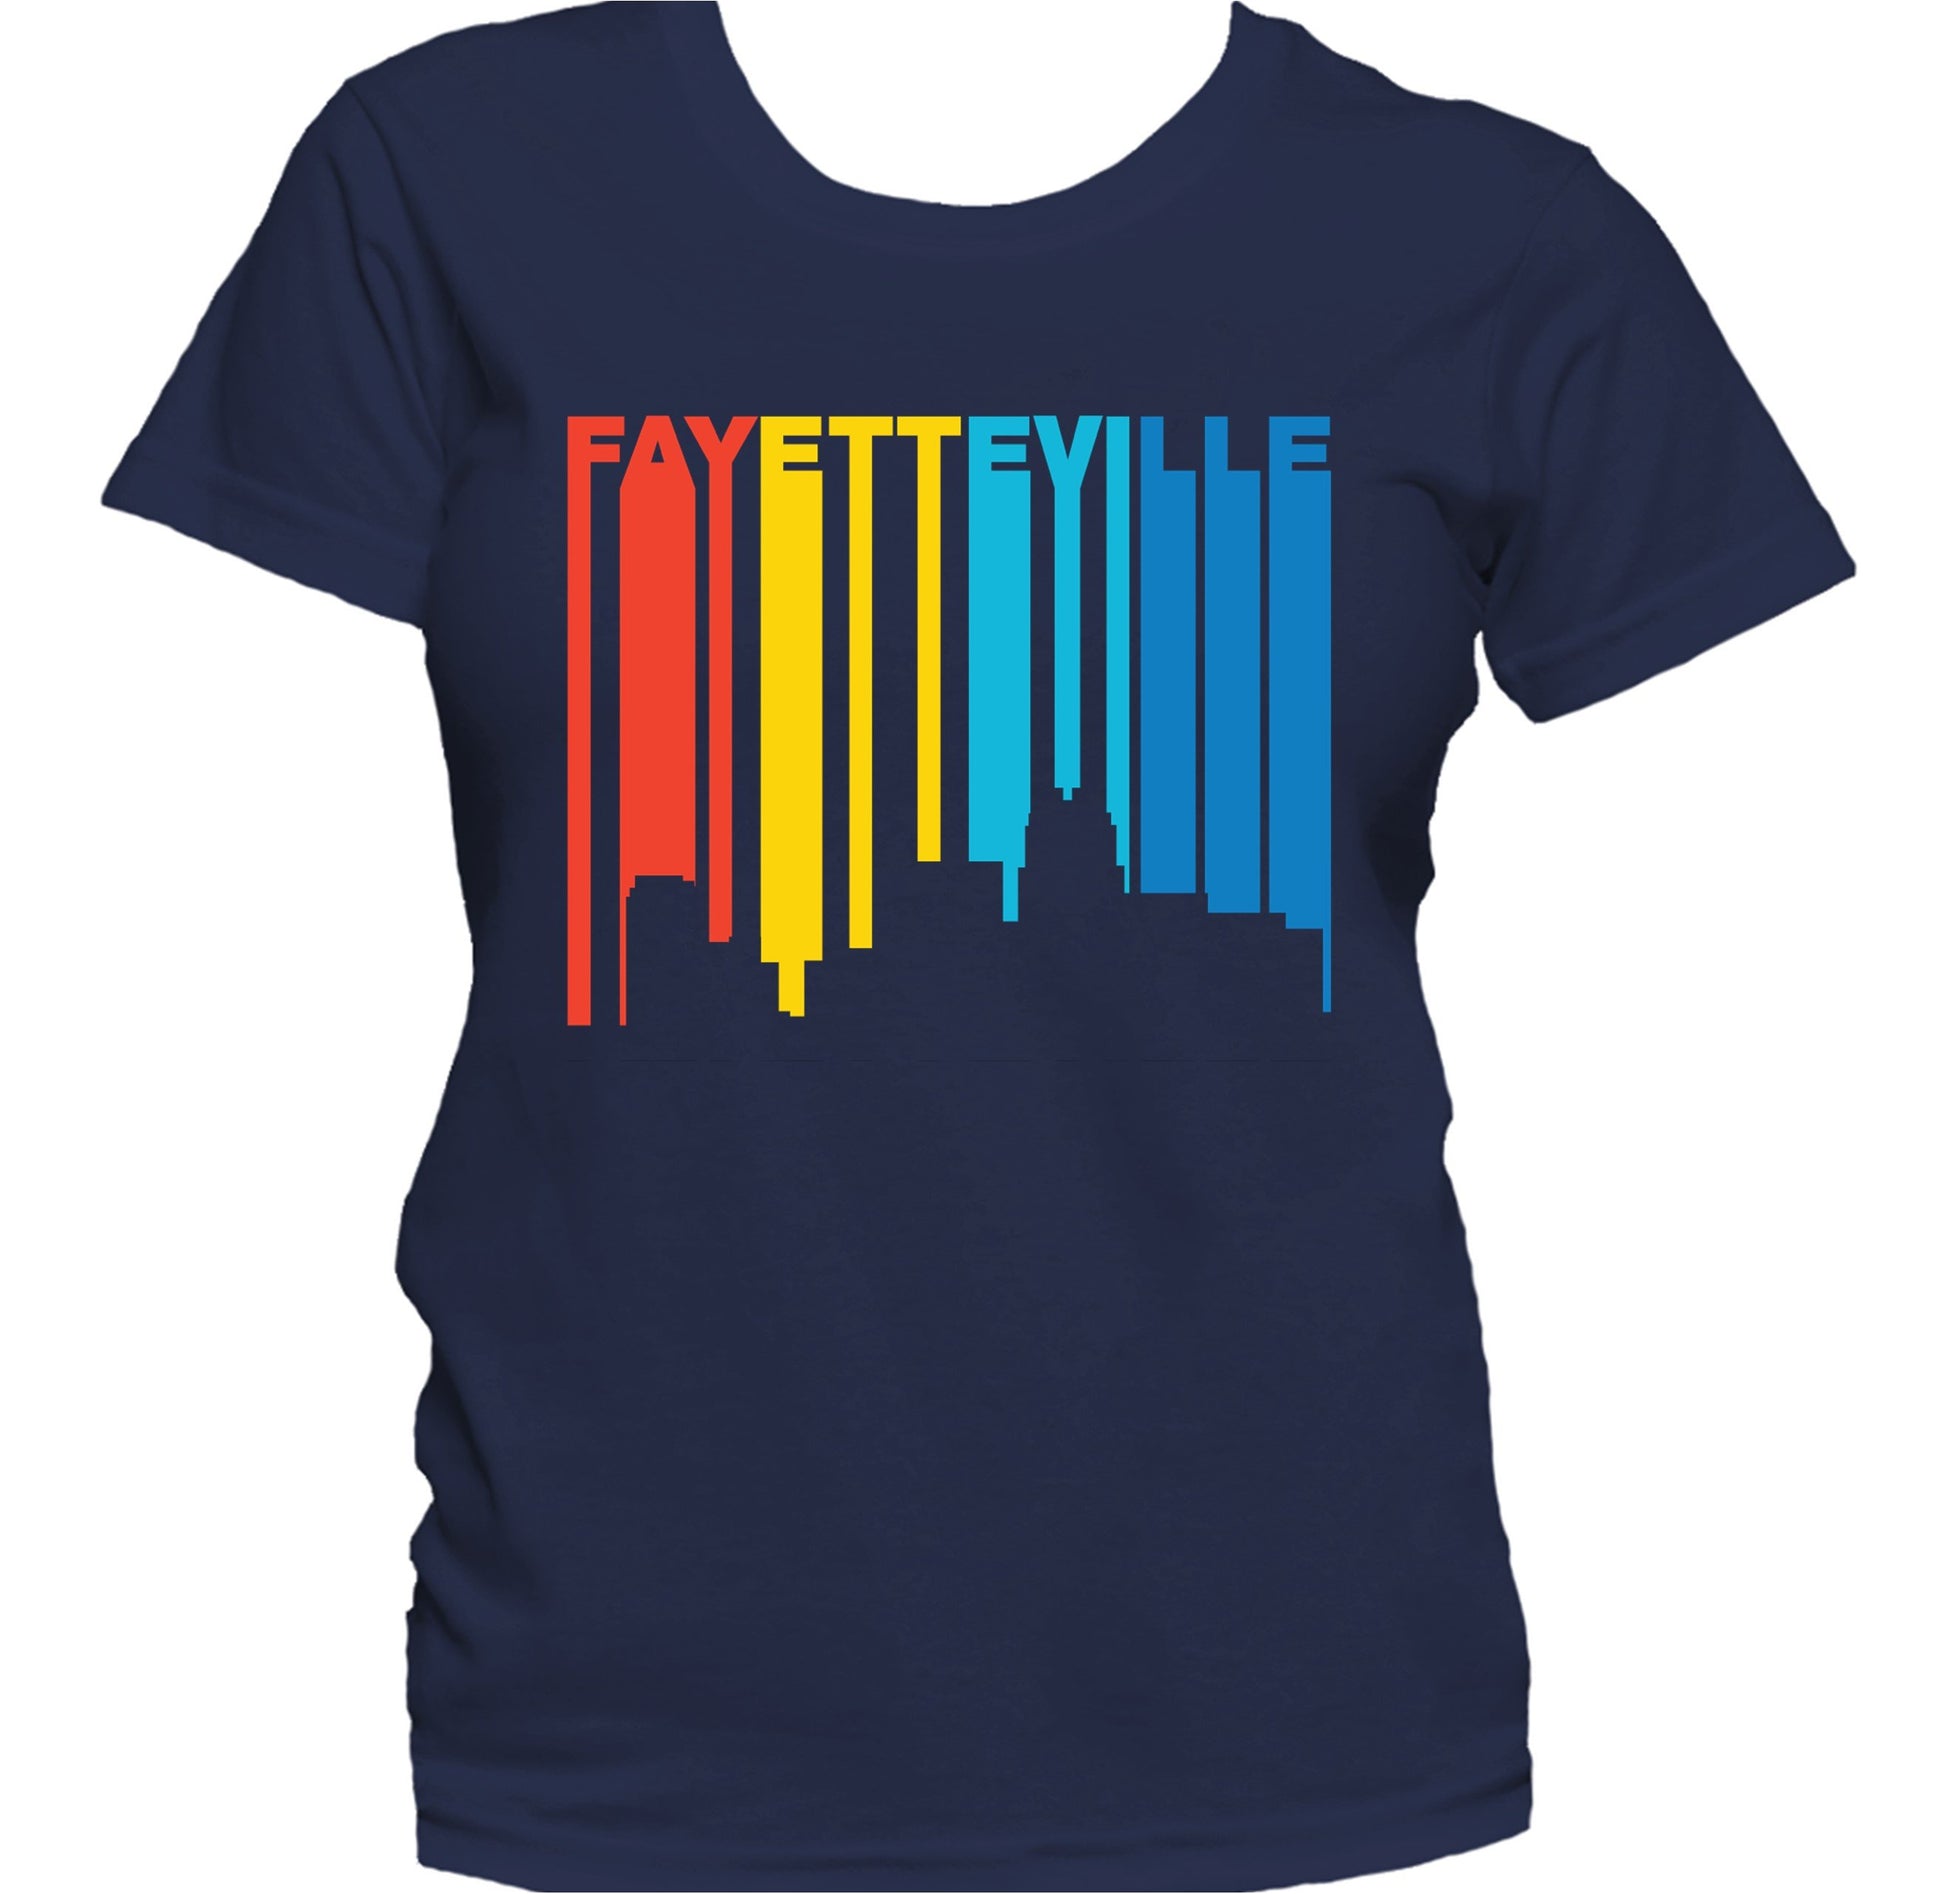 Retro 1970's Style Fayetteville North Carolina Skyline Women's T-Shirt